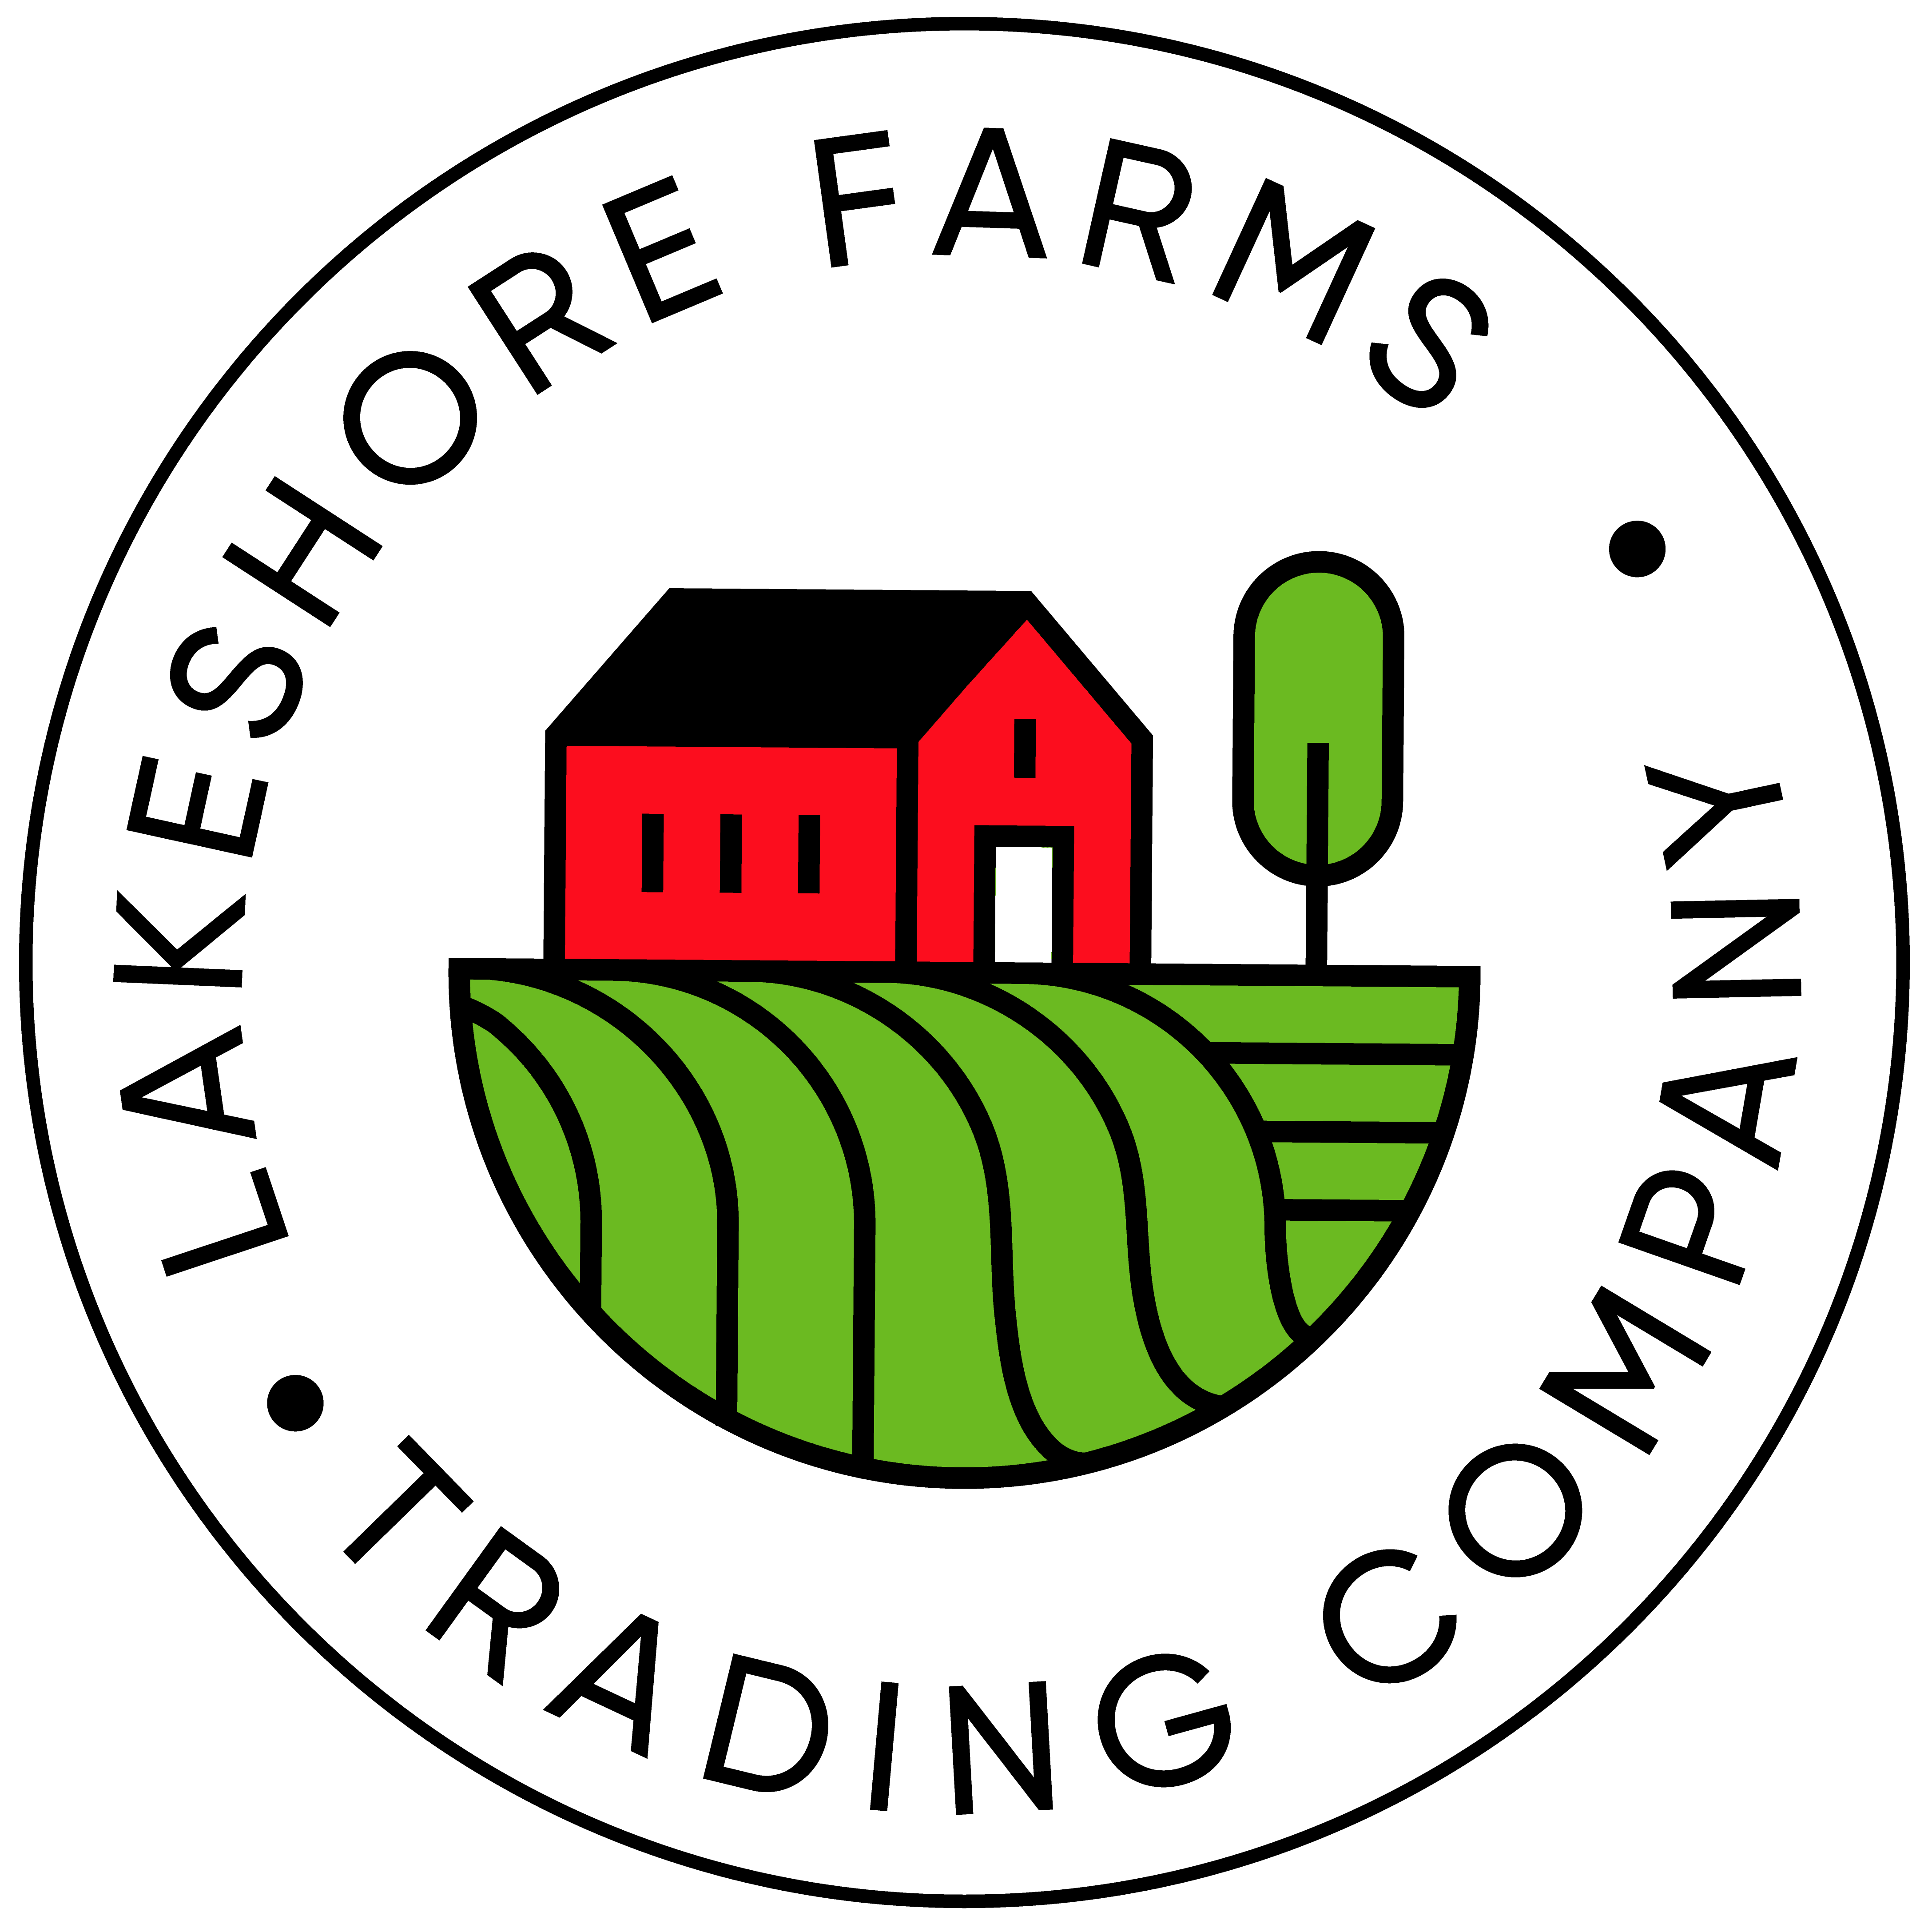 Lakeshore Farms